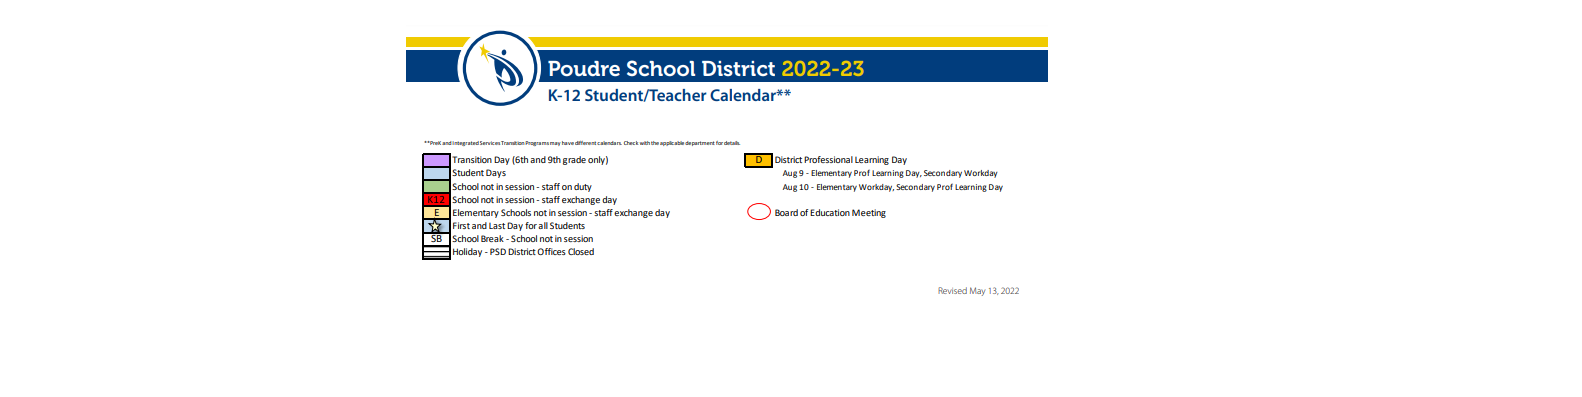 District School Academic Calendar Key for Bennett Elementary School